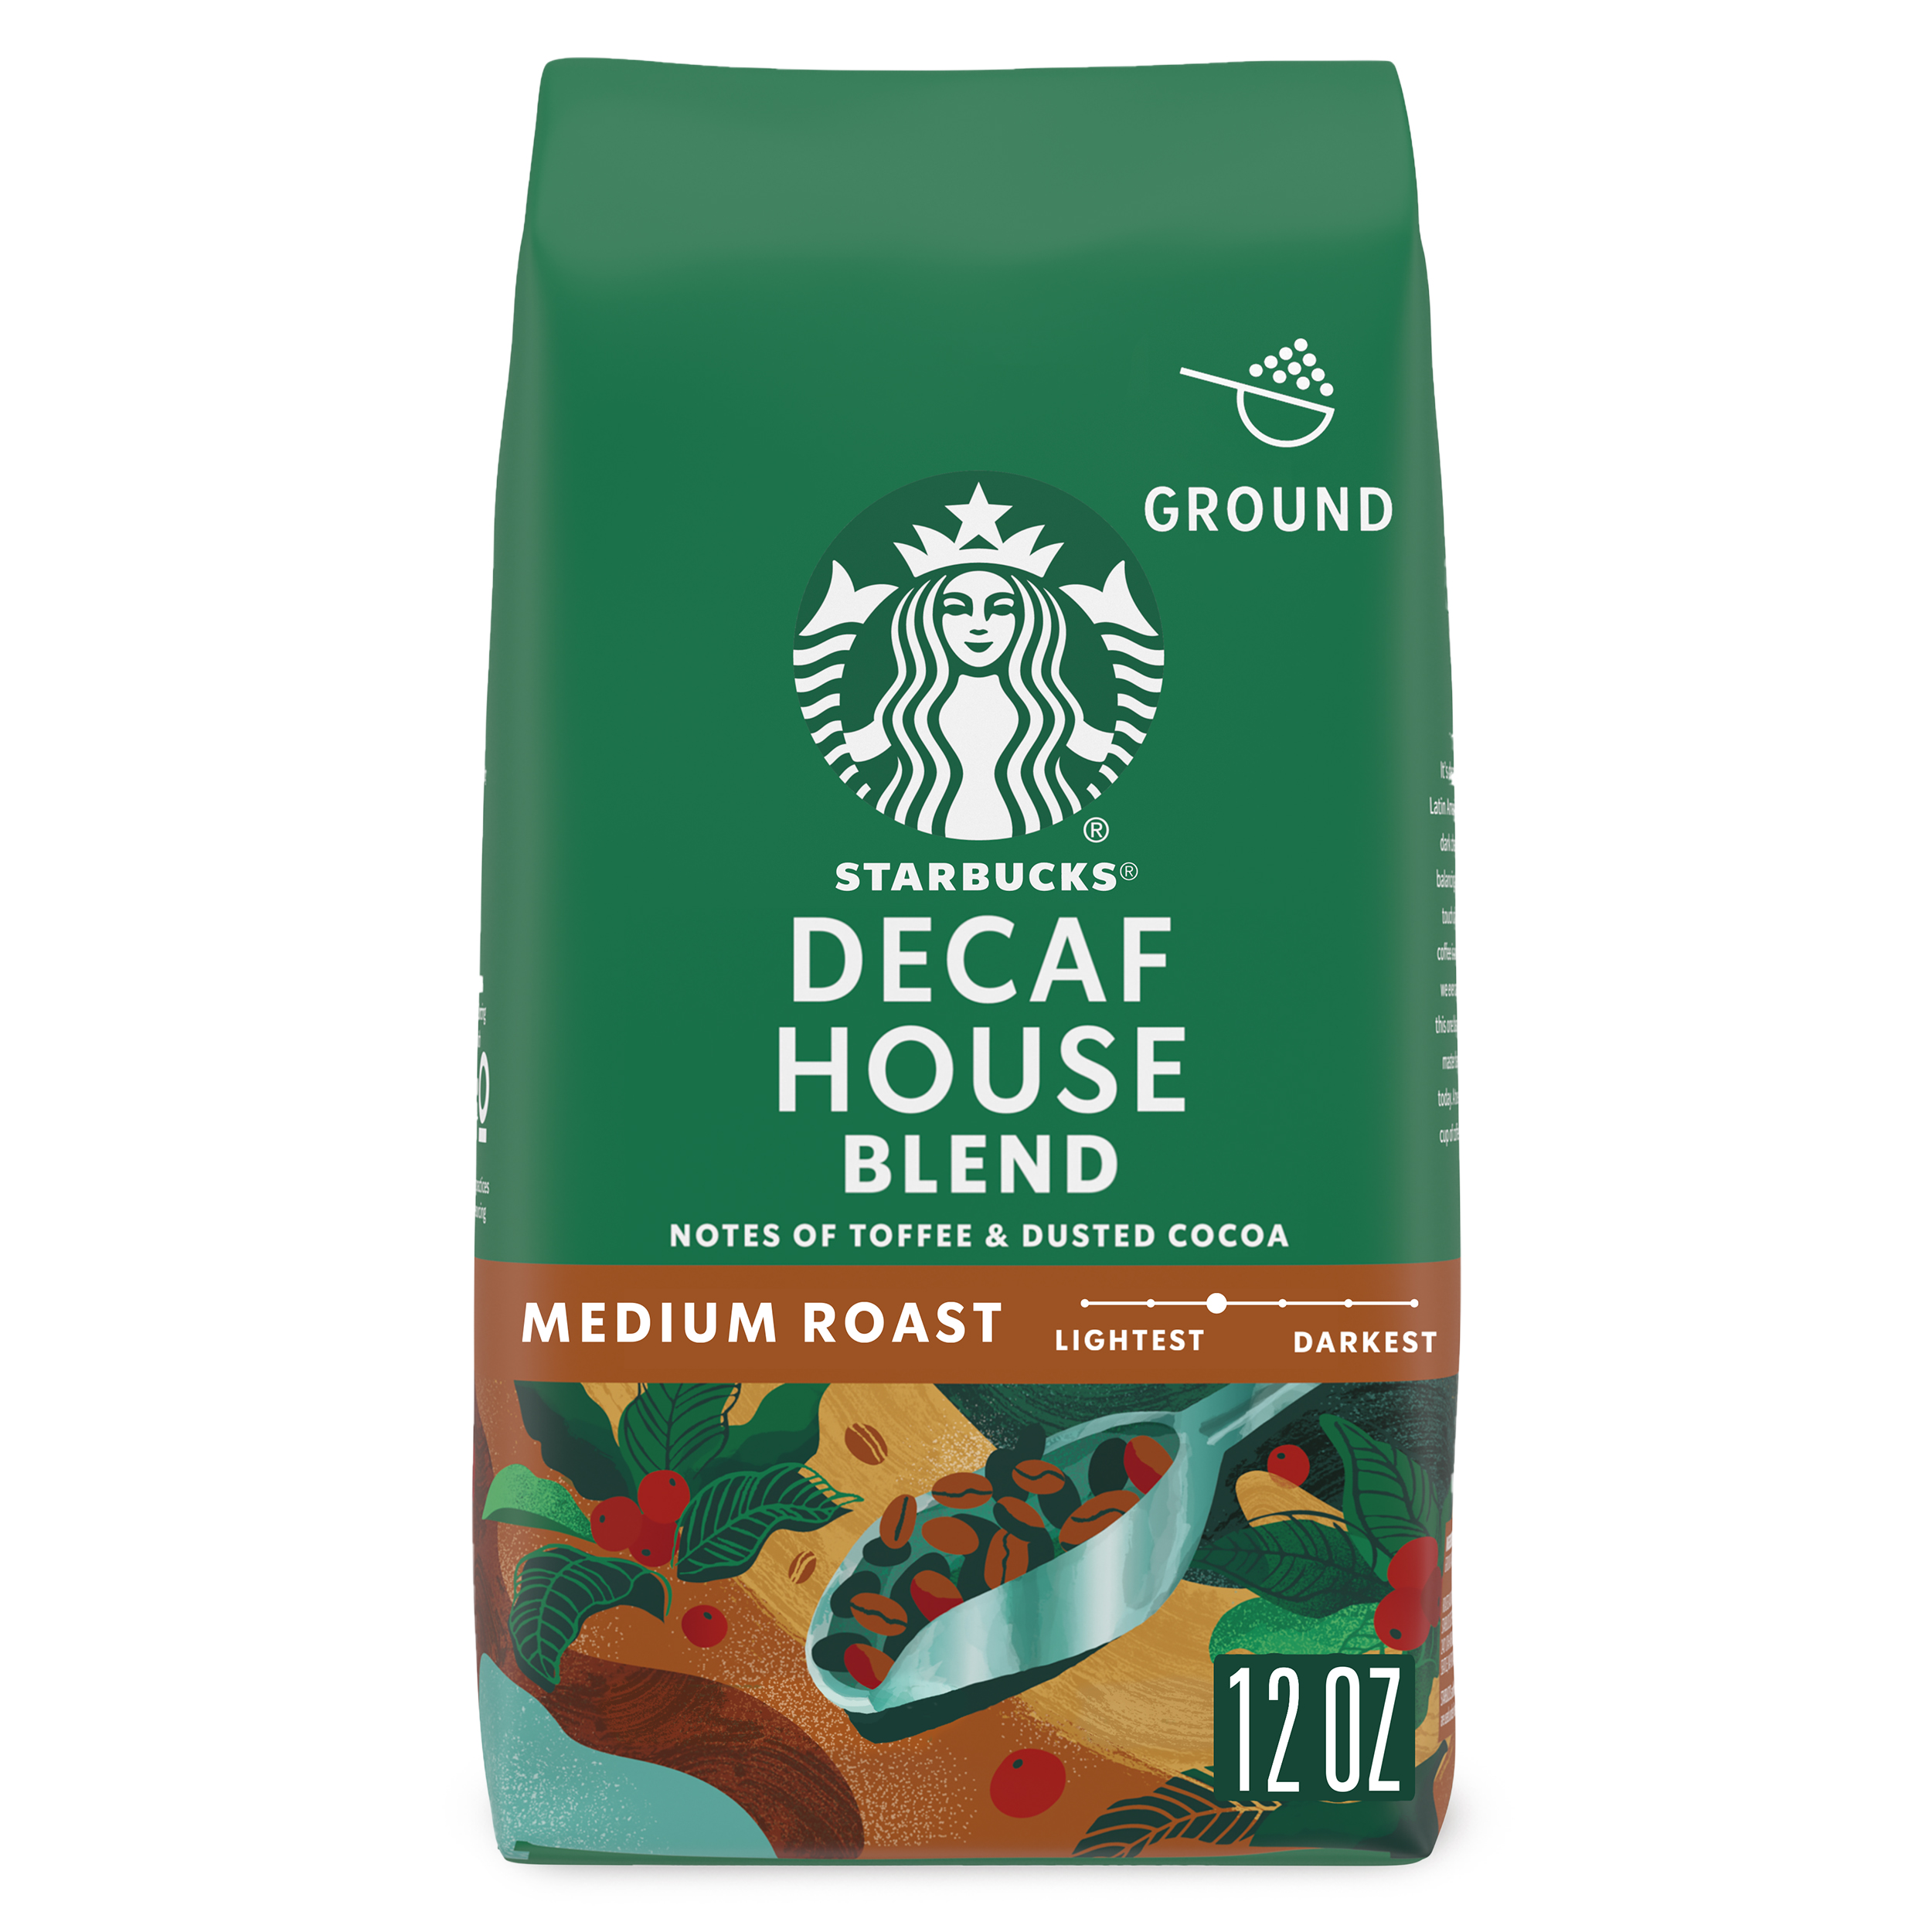 Starbucks Arabica Beans Decaf House Blend, Medium Roast, Ground Coffee, 12 oz - image 1 of 8